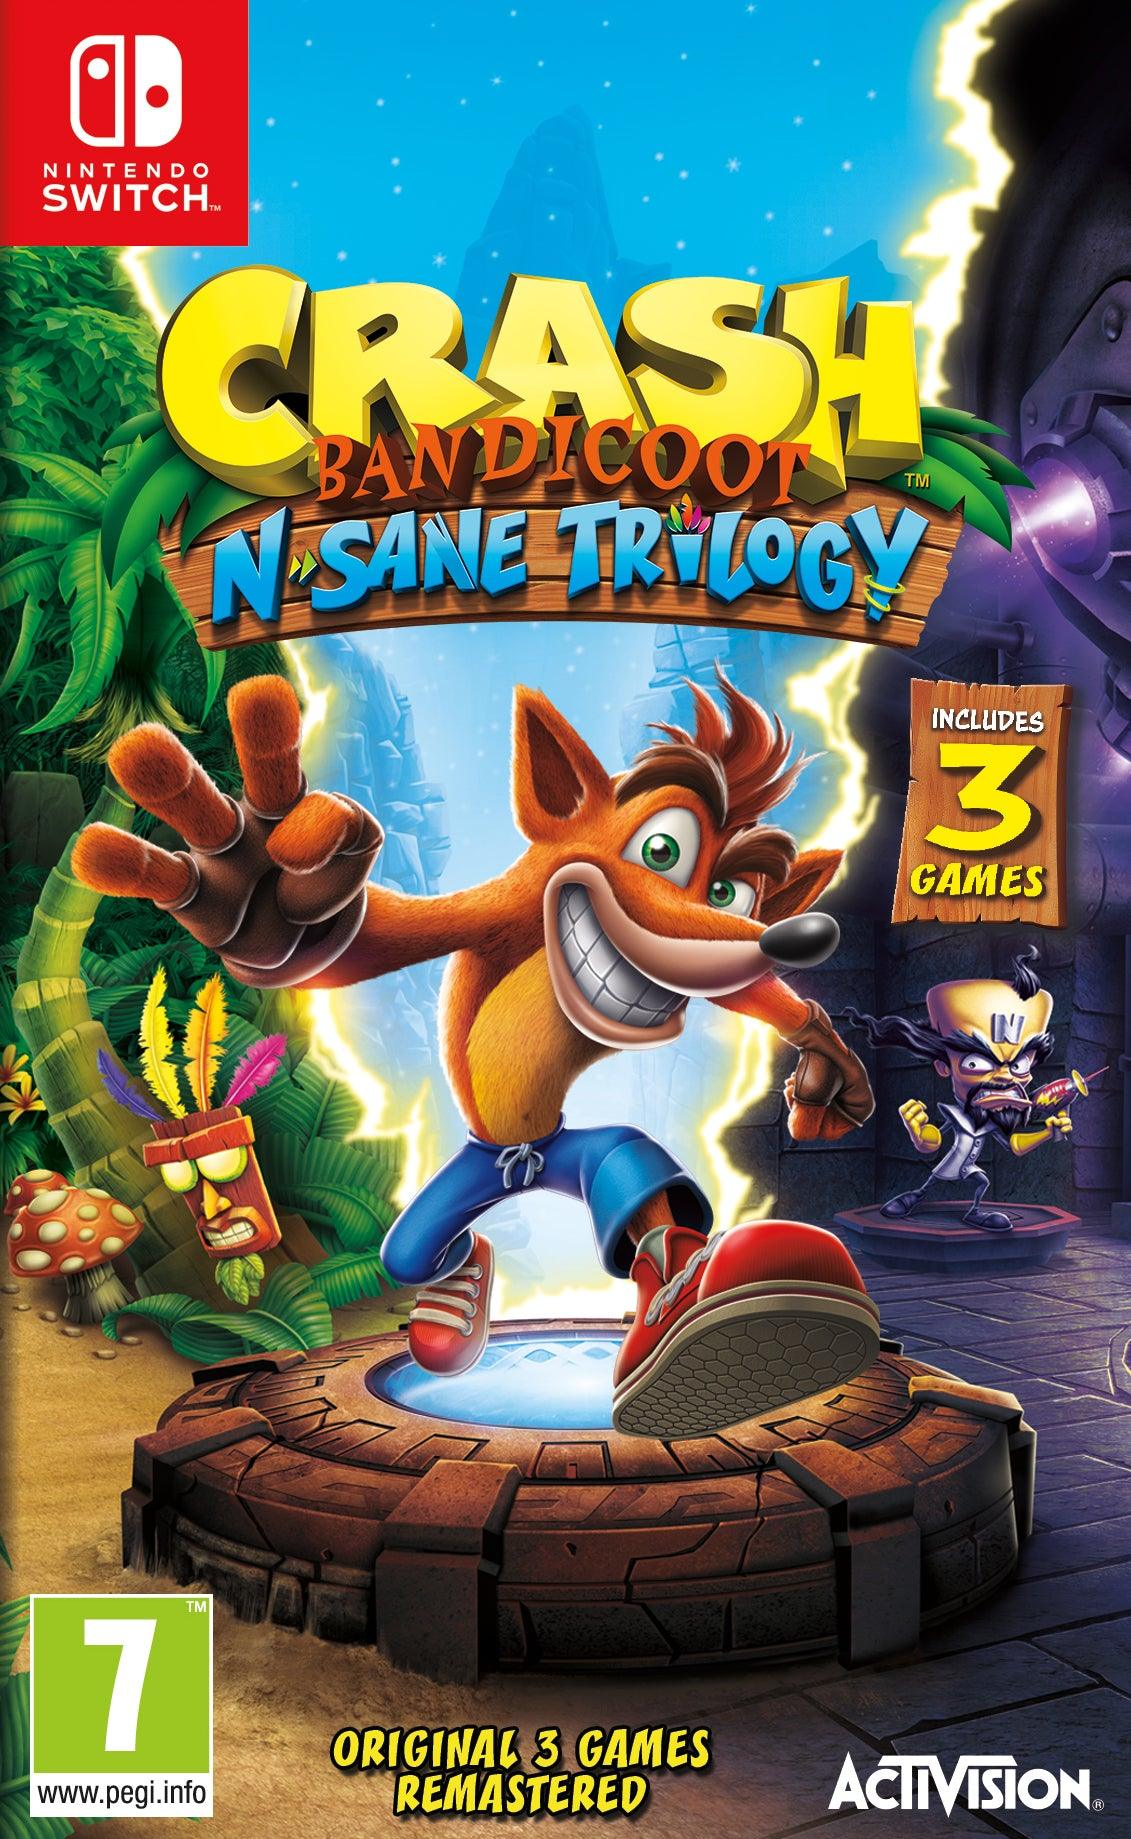 Crash Bandicoot N Sane Trilogy - Want a New Gadget